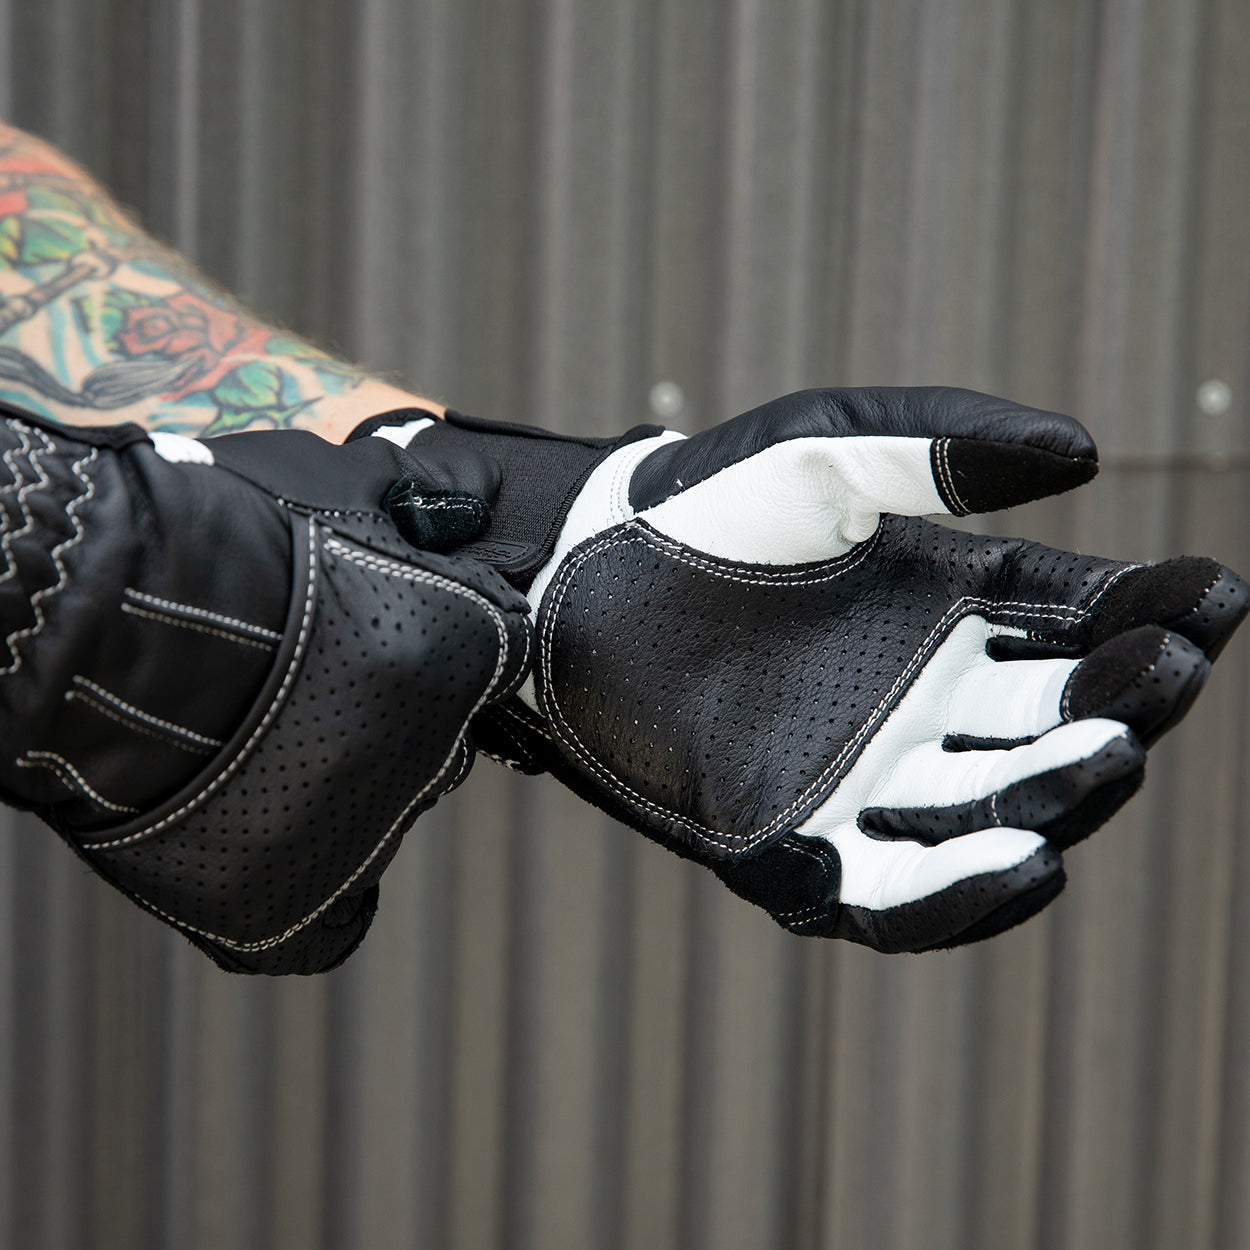 Borrego Gloves - Black/Cement